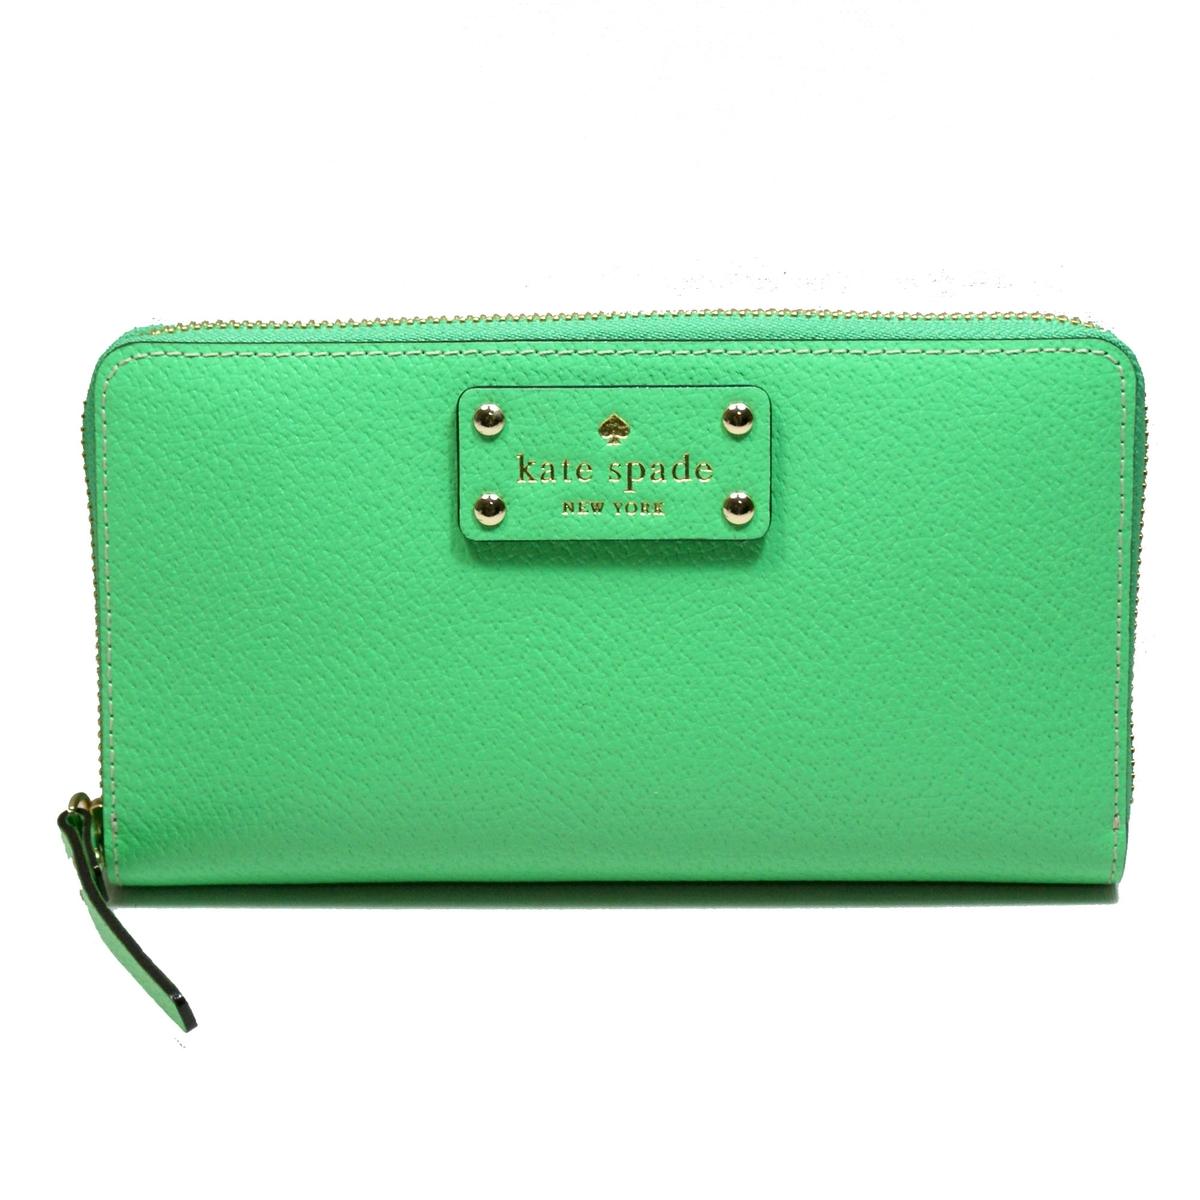 Kate Spade Neda Wellesley Leather Bud Green Zip Around Wallet/ Clutch #